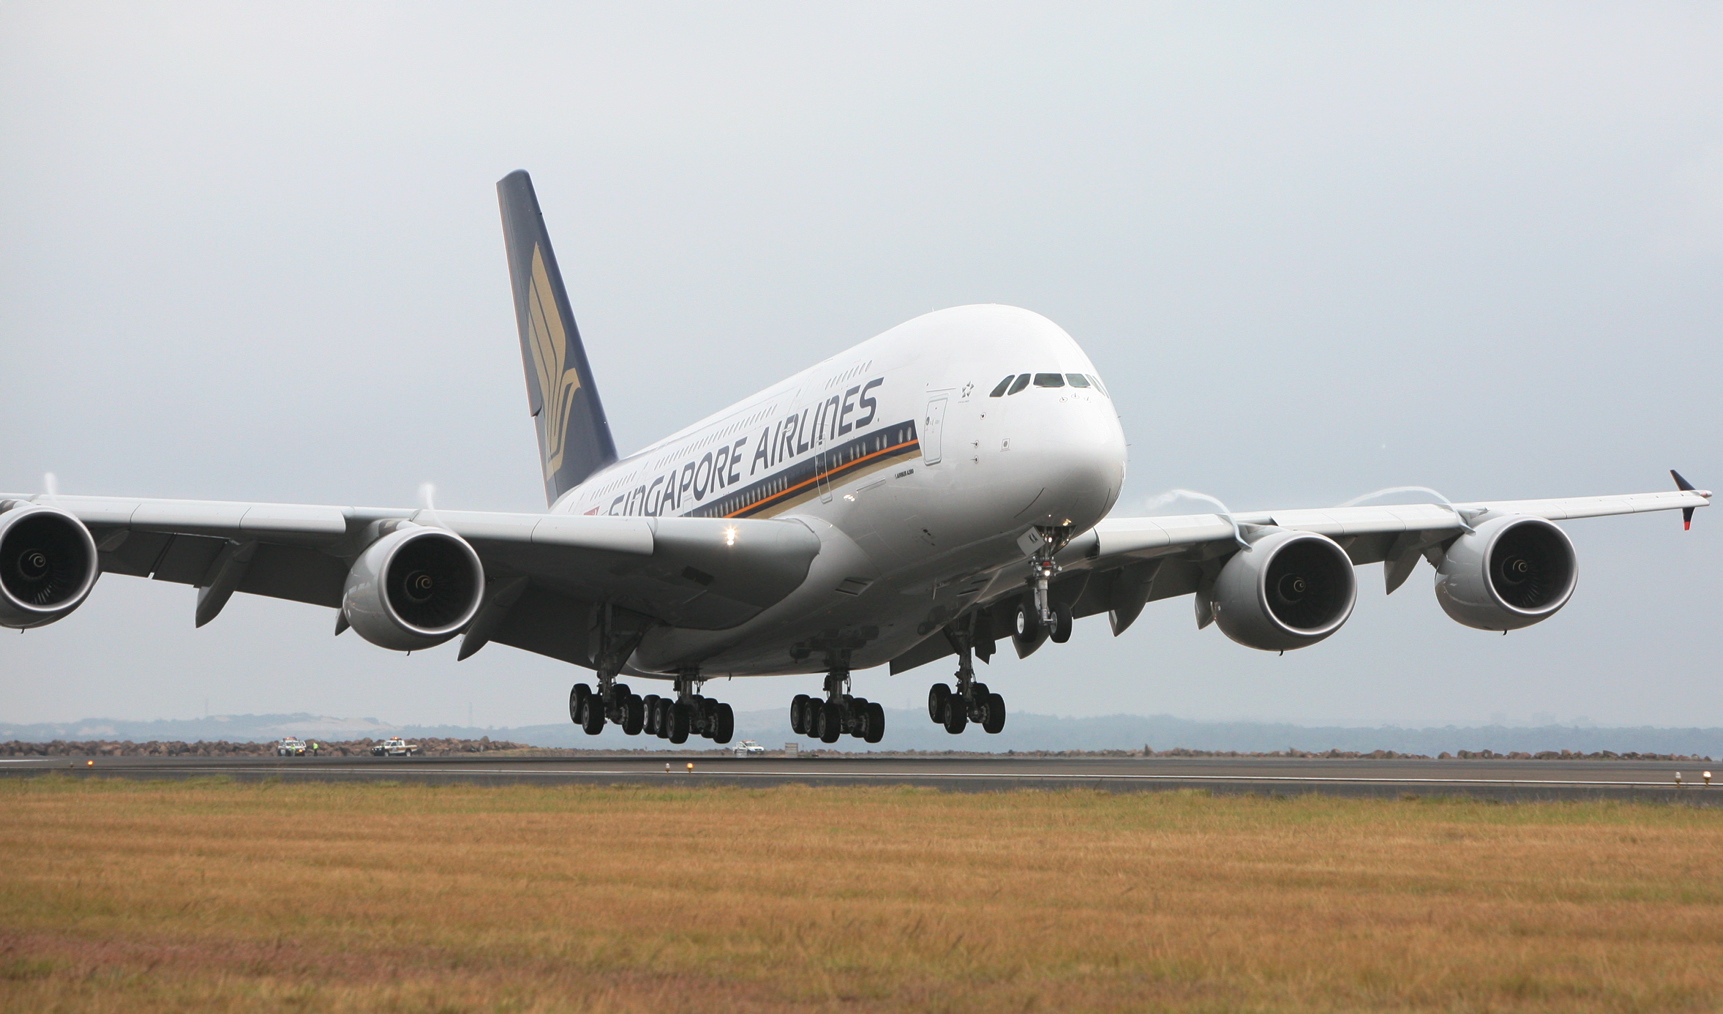 Is A380 the safest plane?